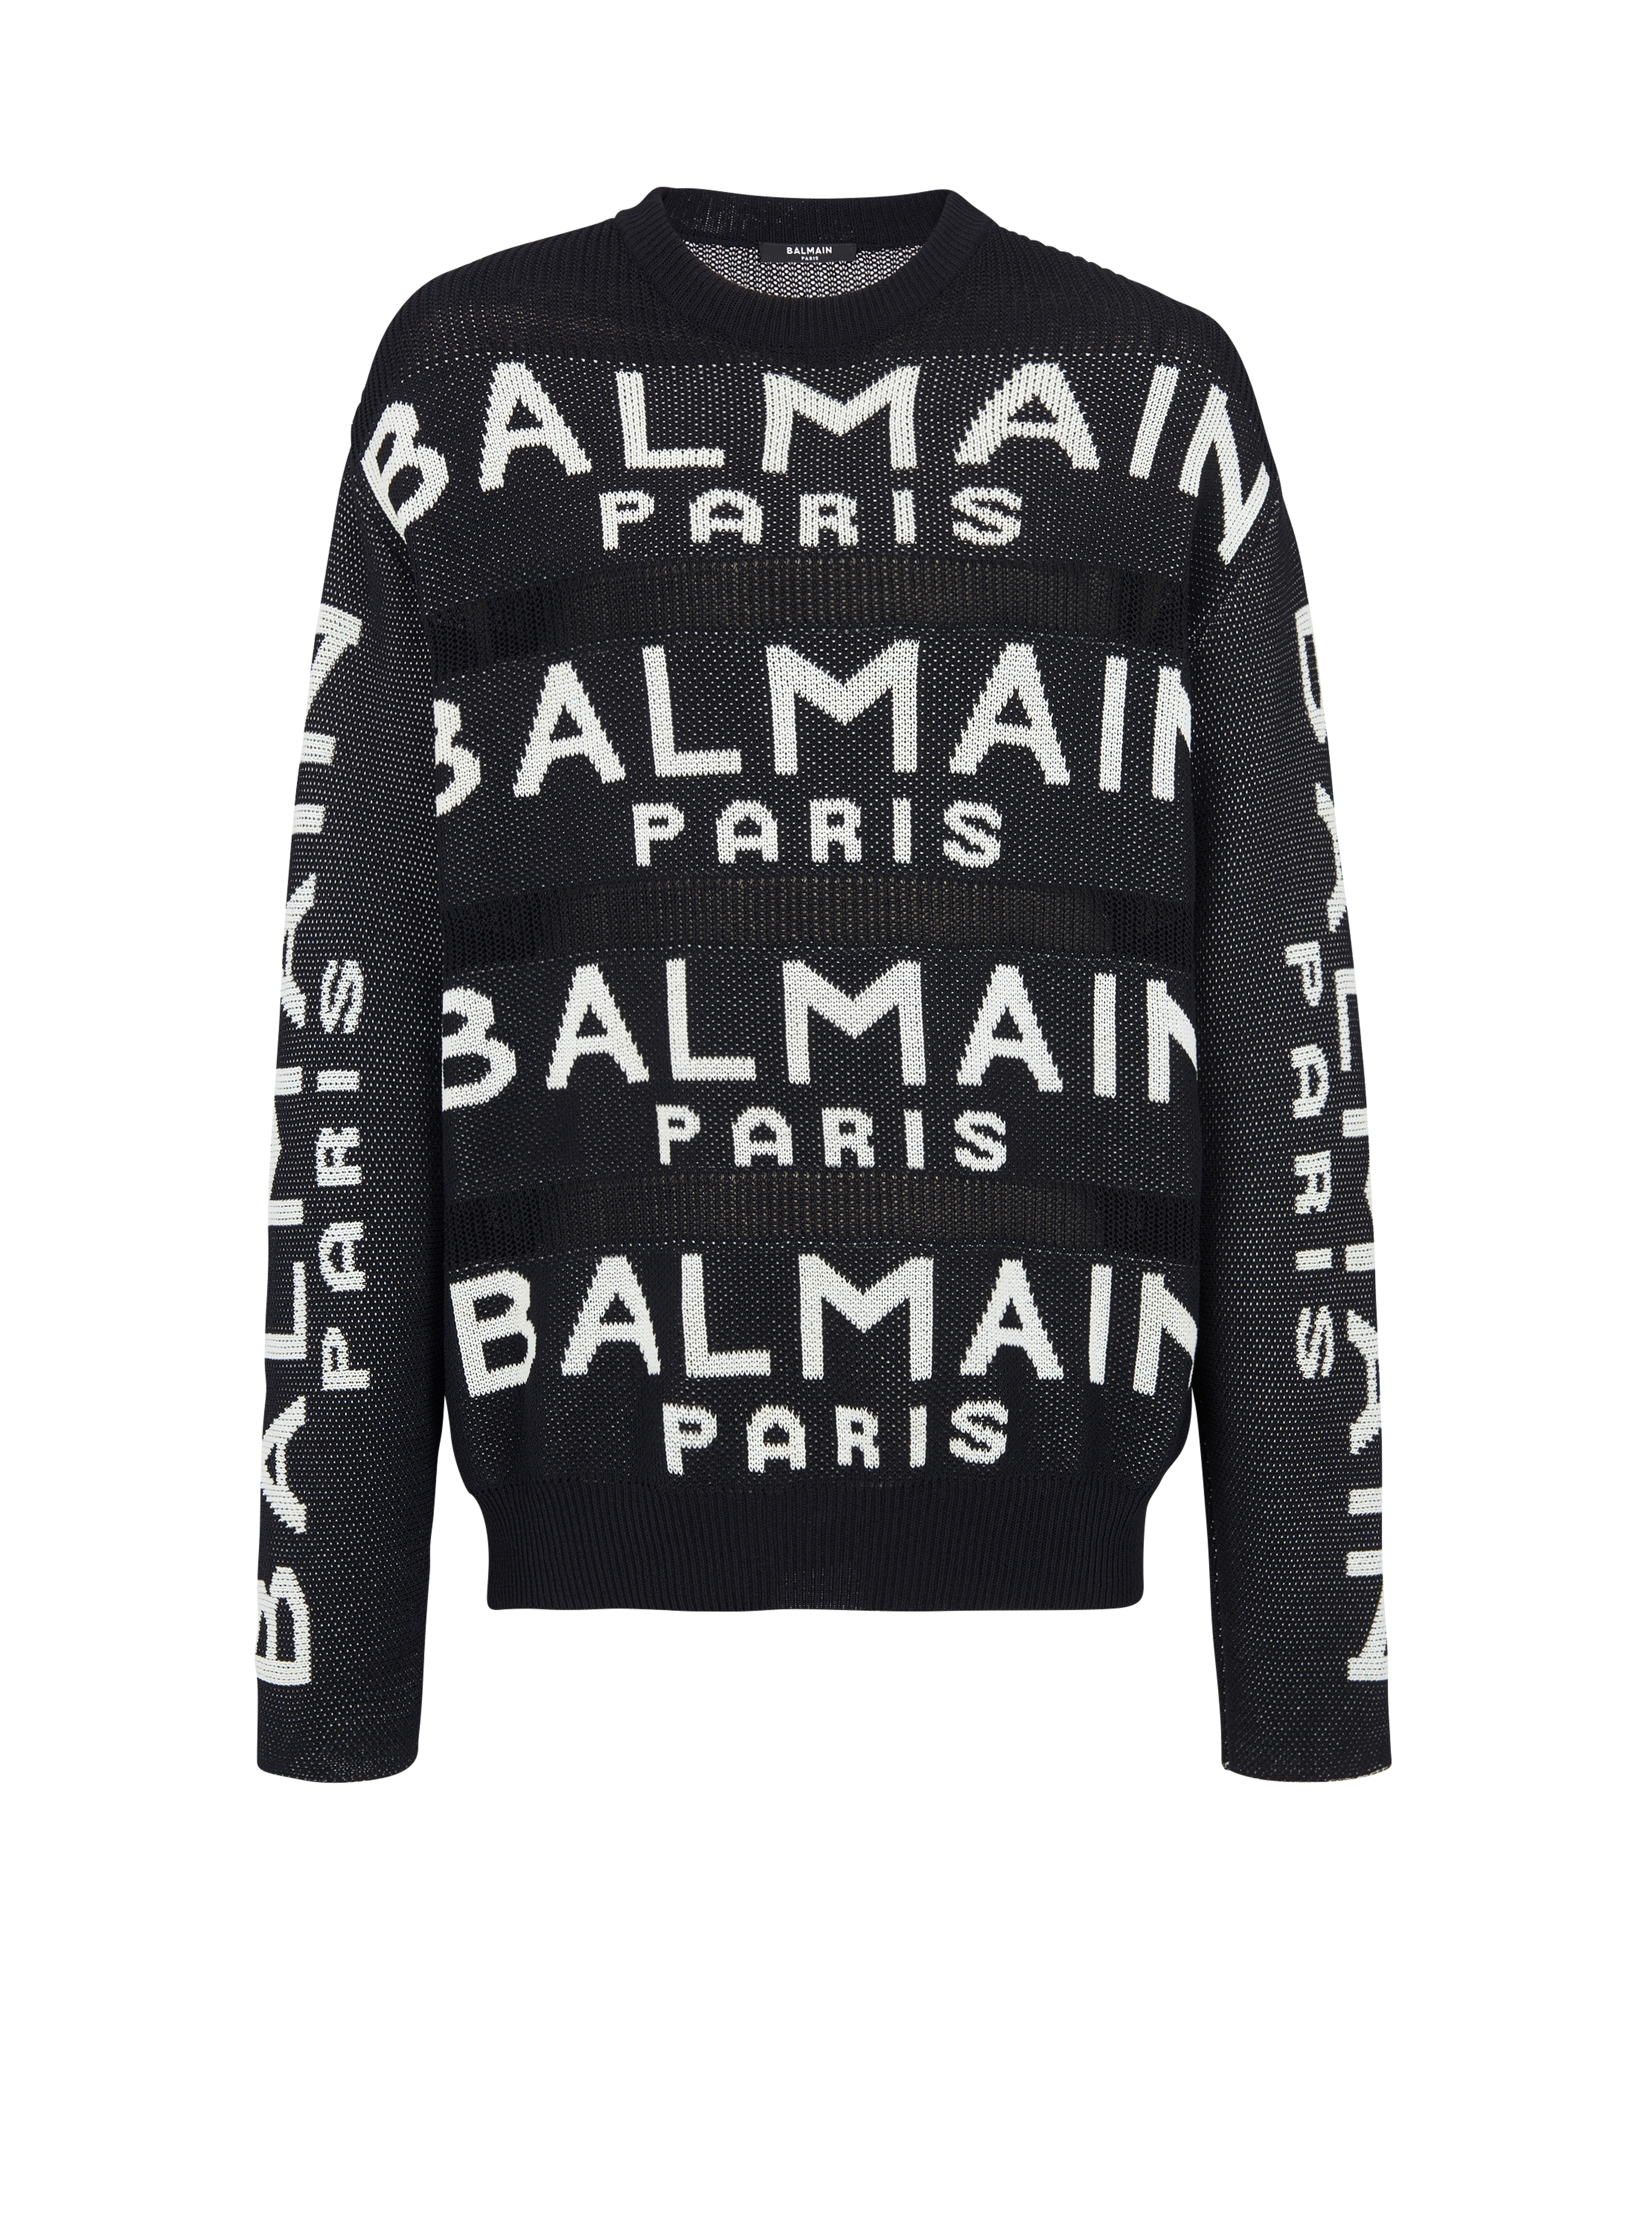 Knit jumper with Balmain logo, black